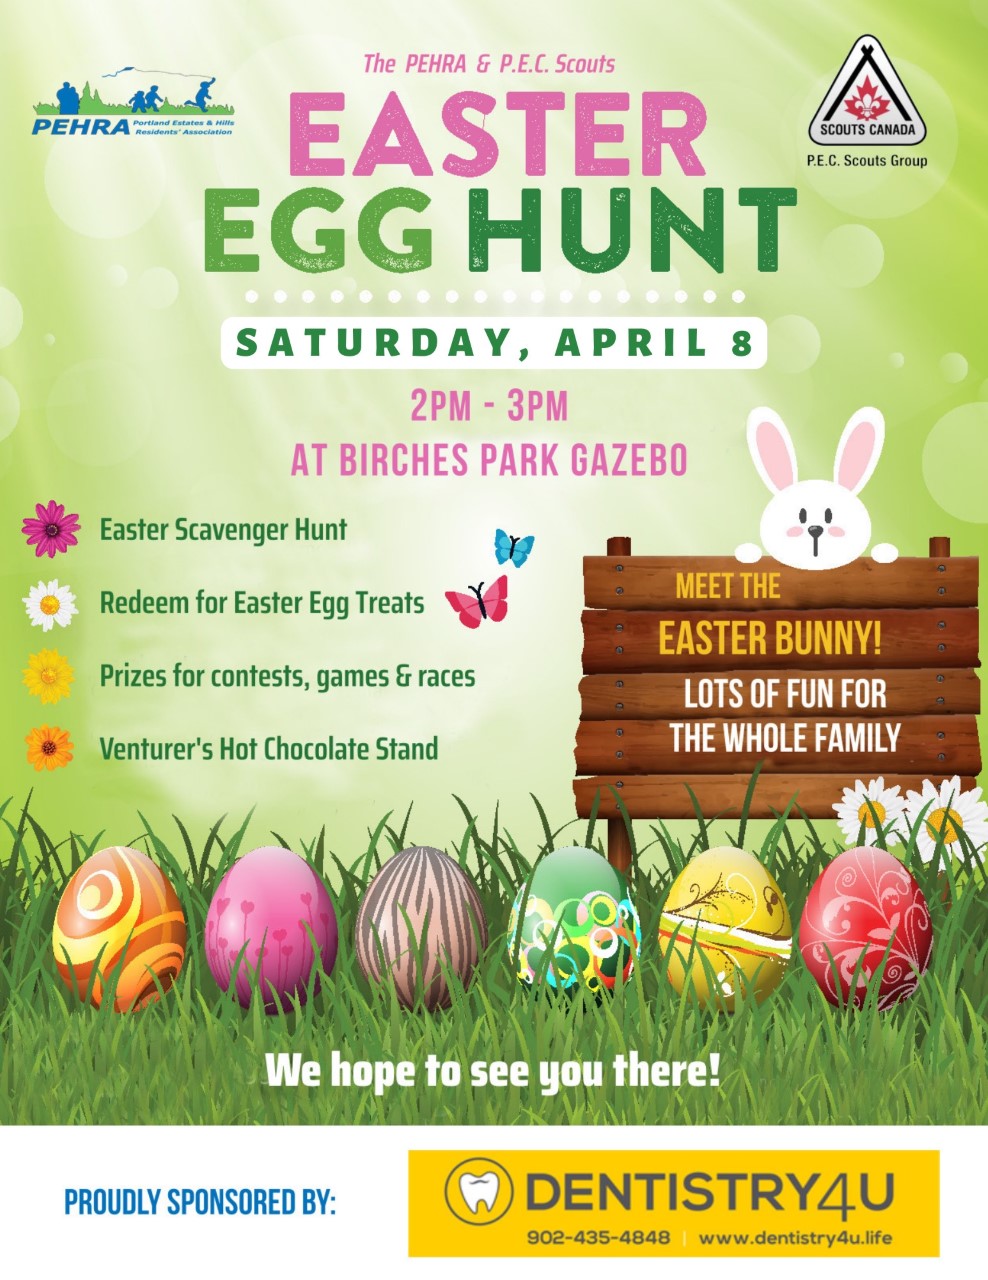 Egg hunt poster